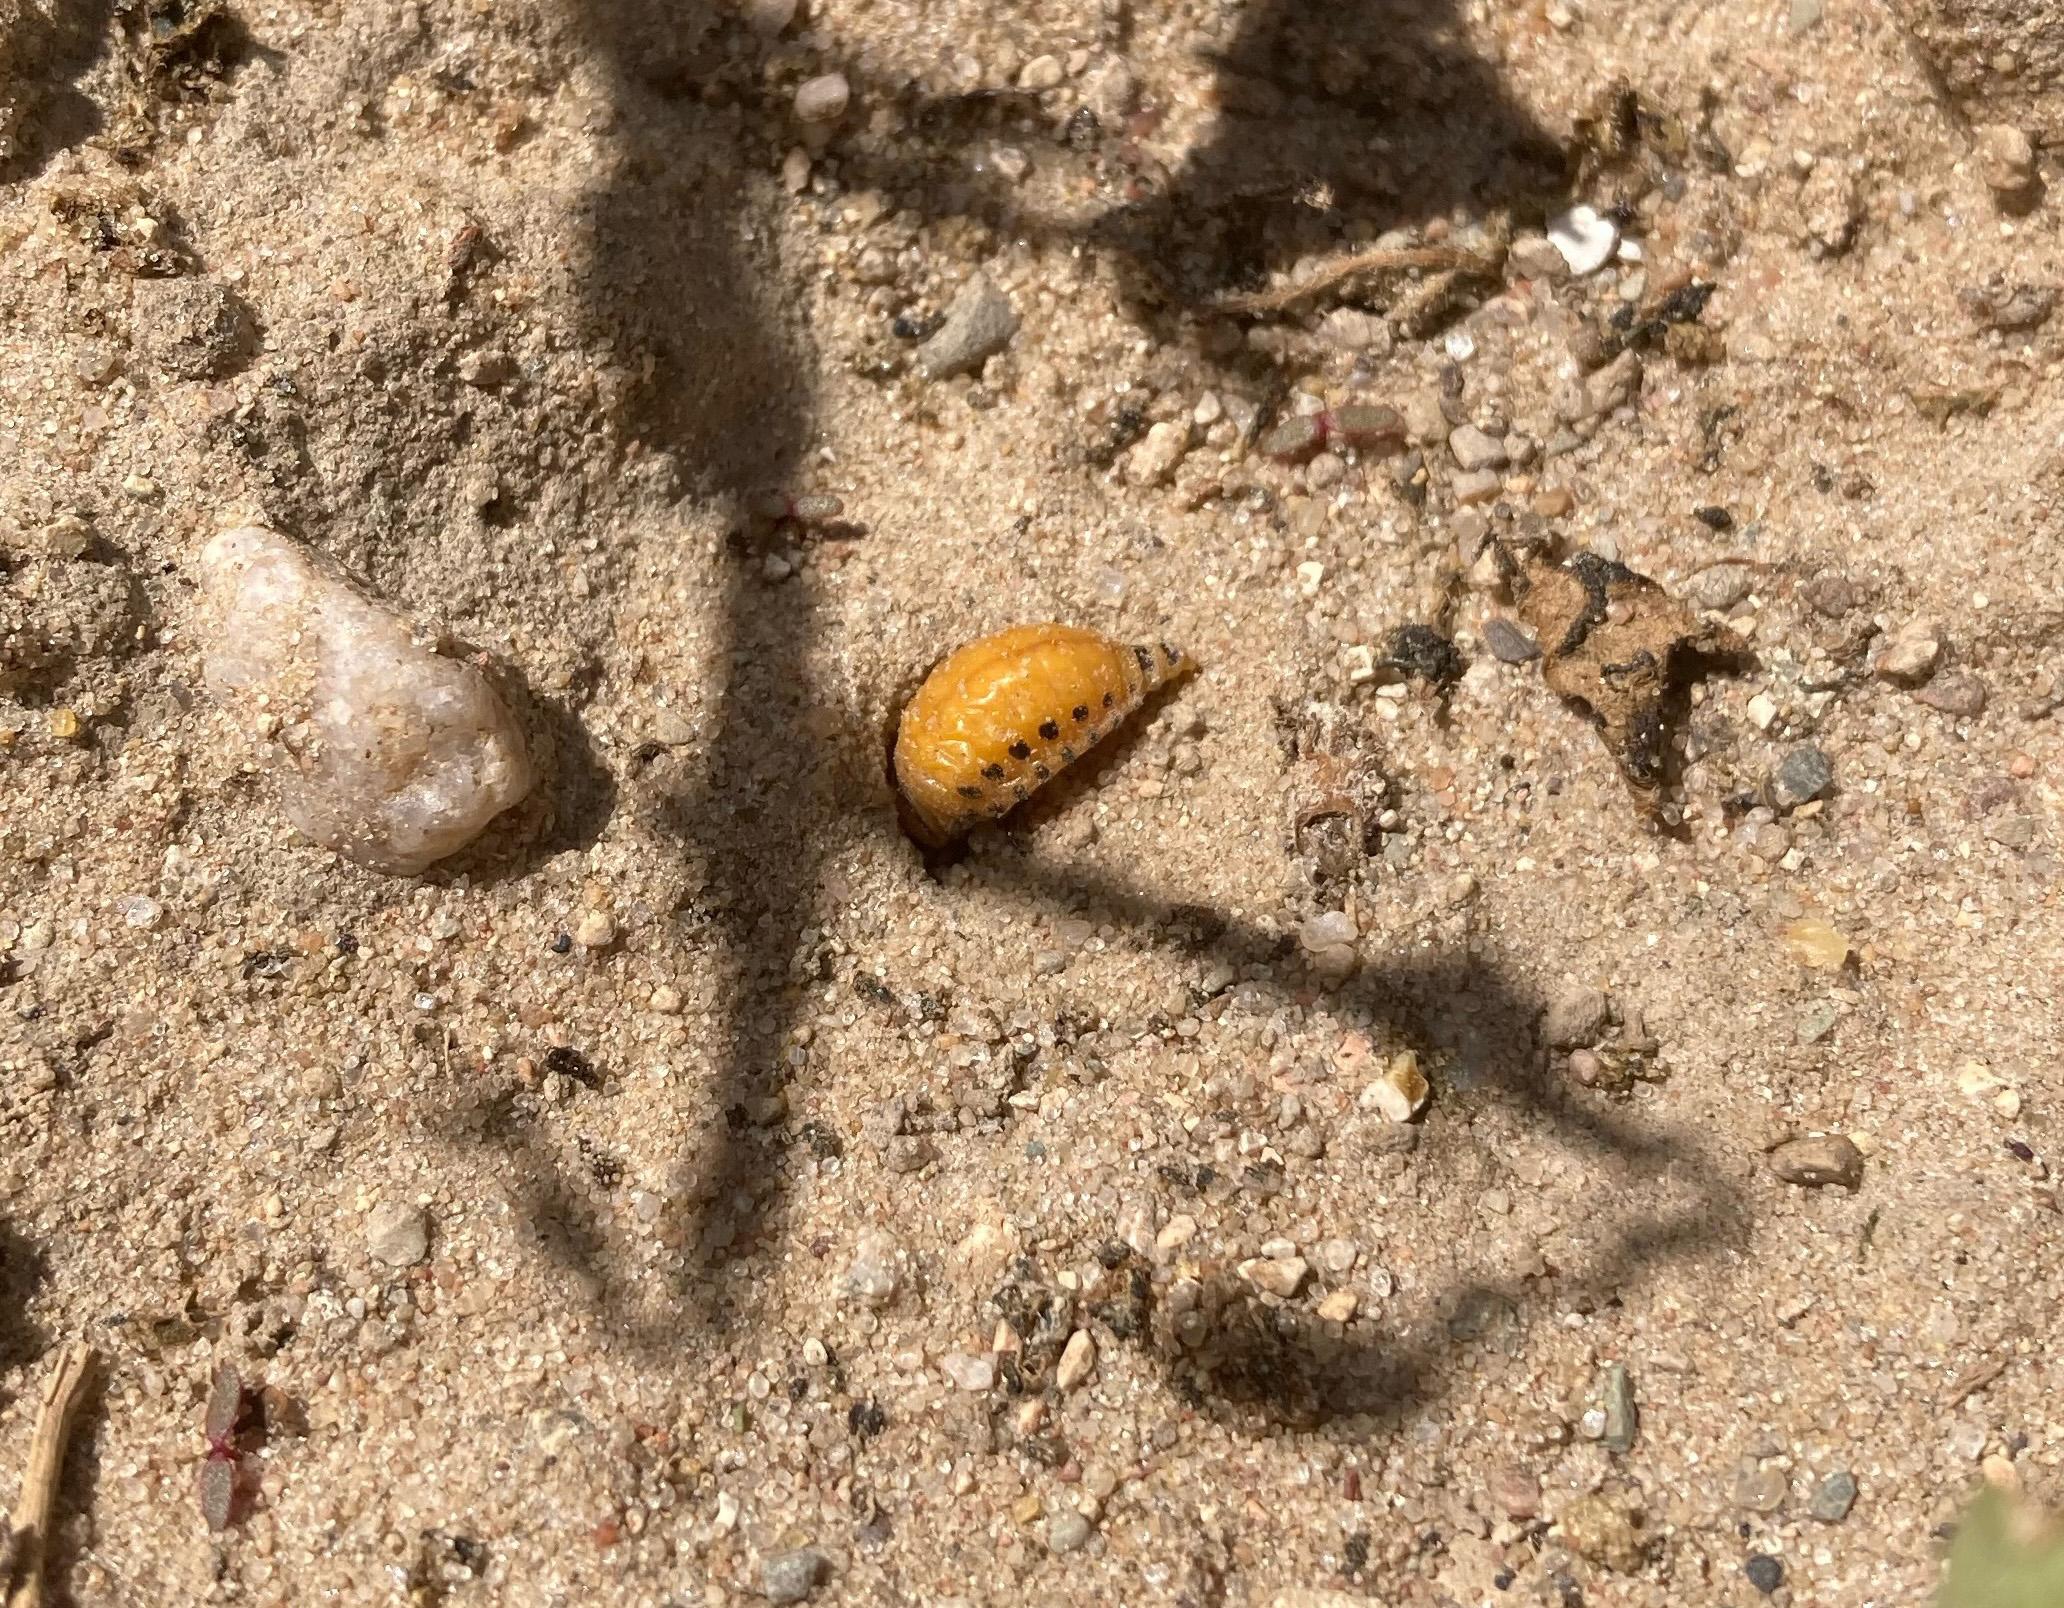 Pupating Colorado potato beetle larva in soil.